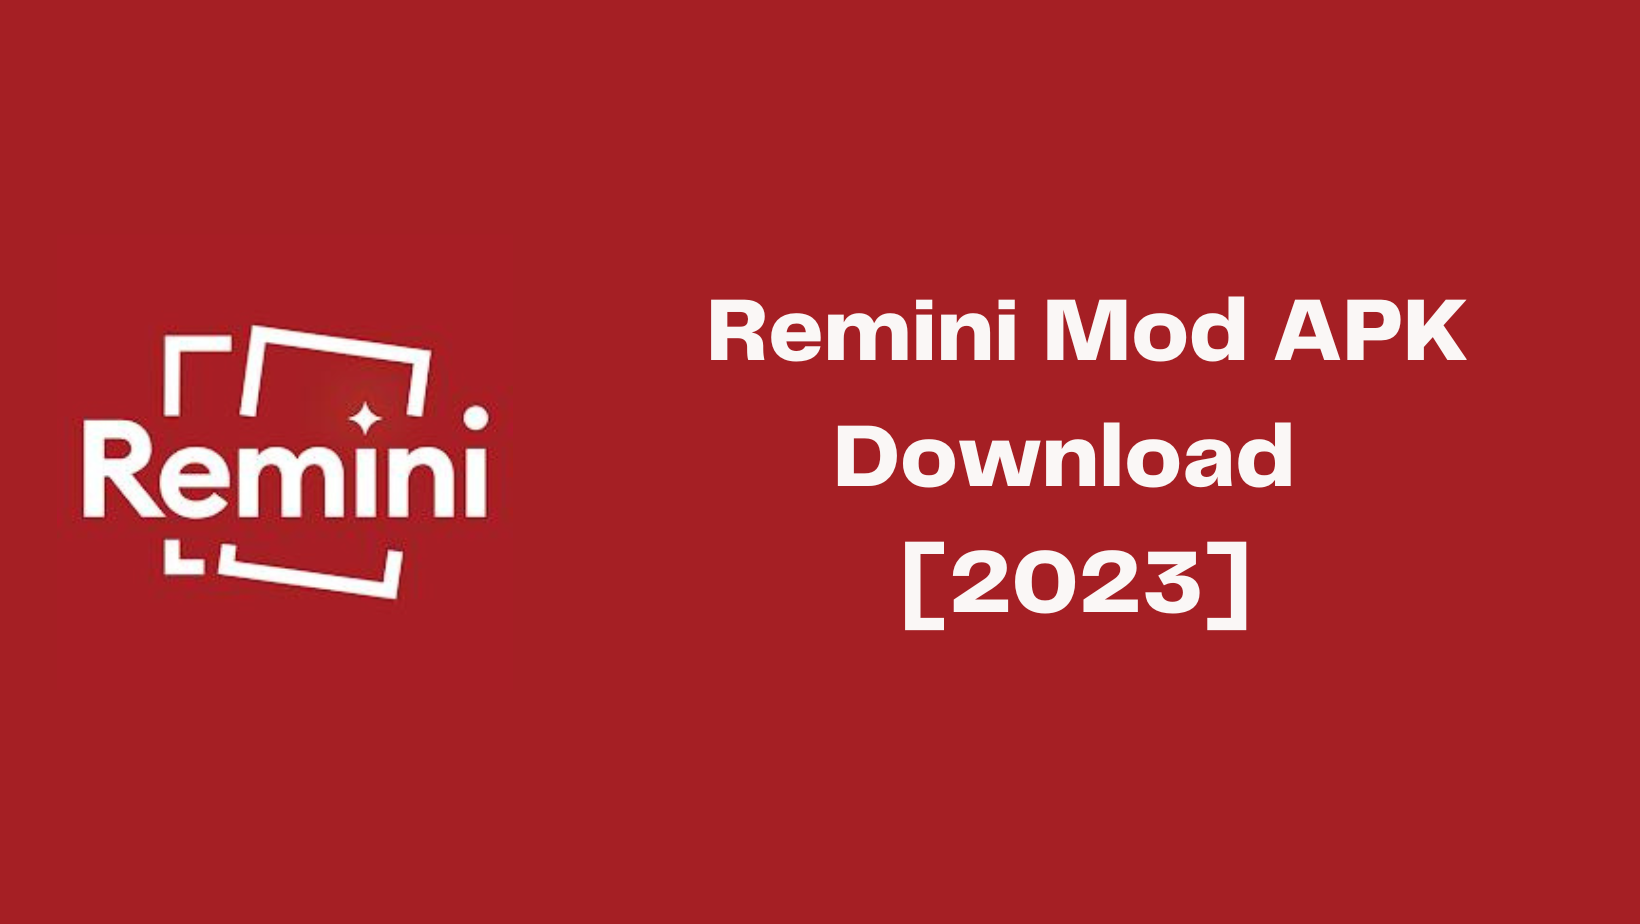 Remini Mod APK Download